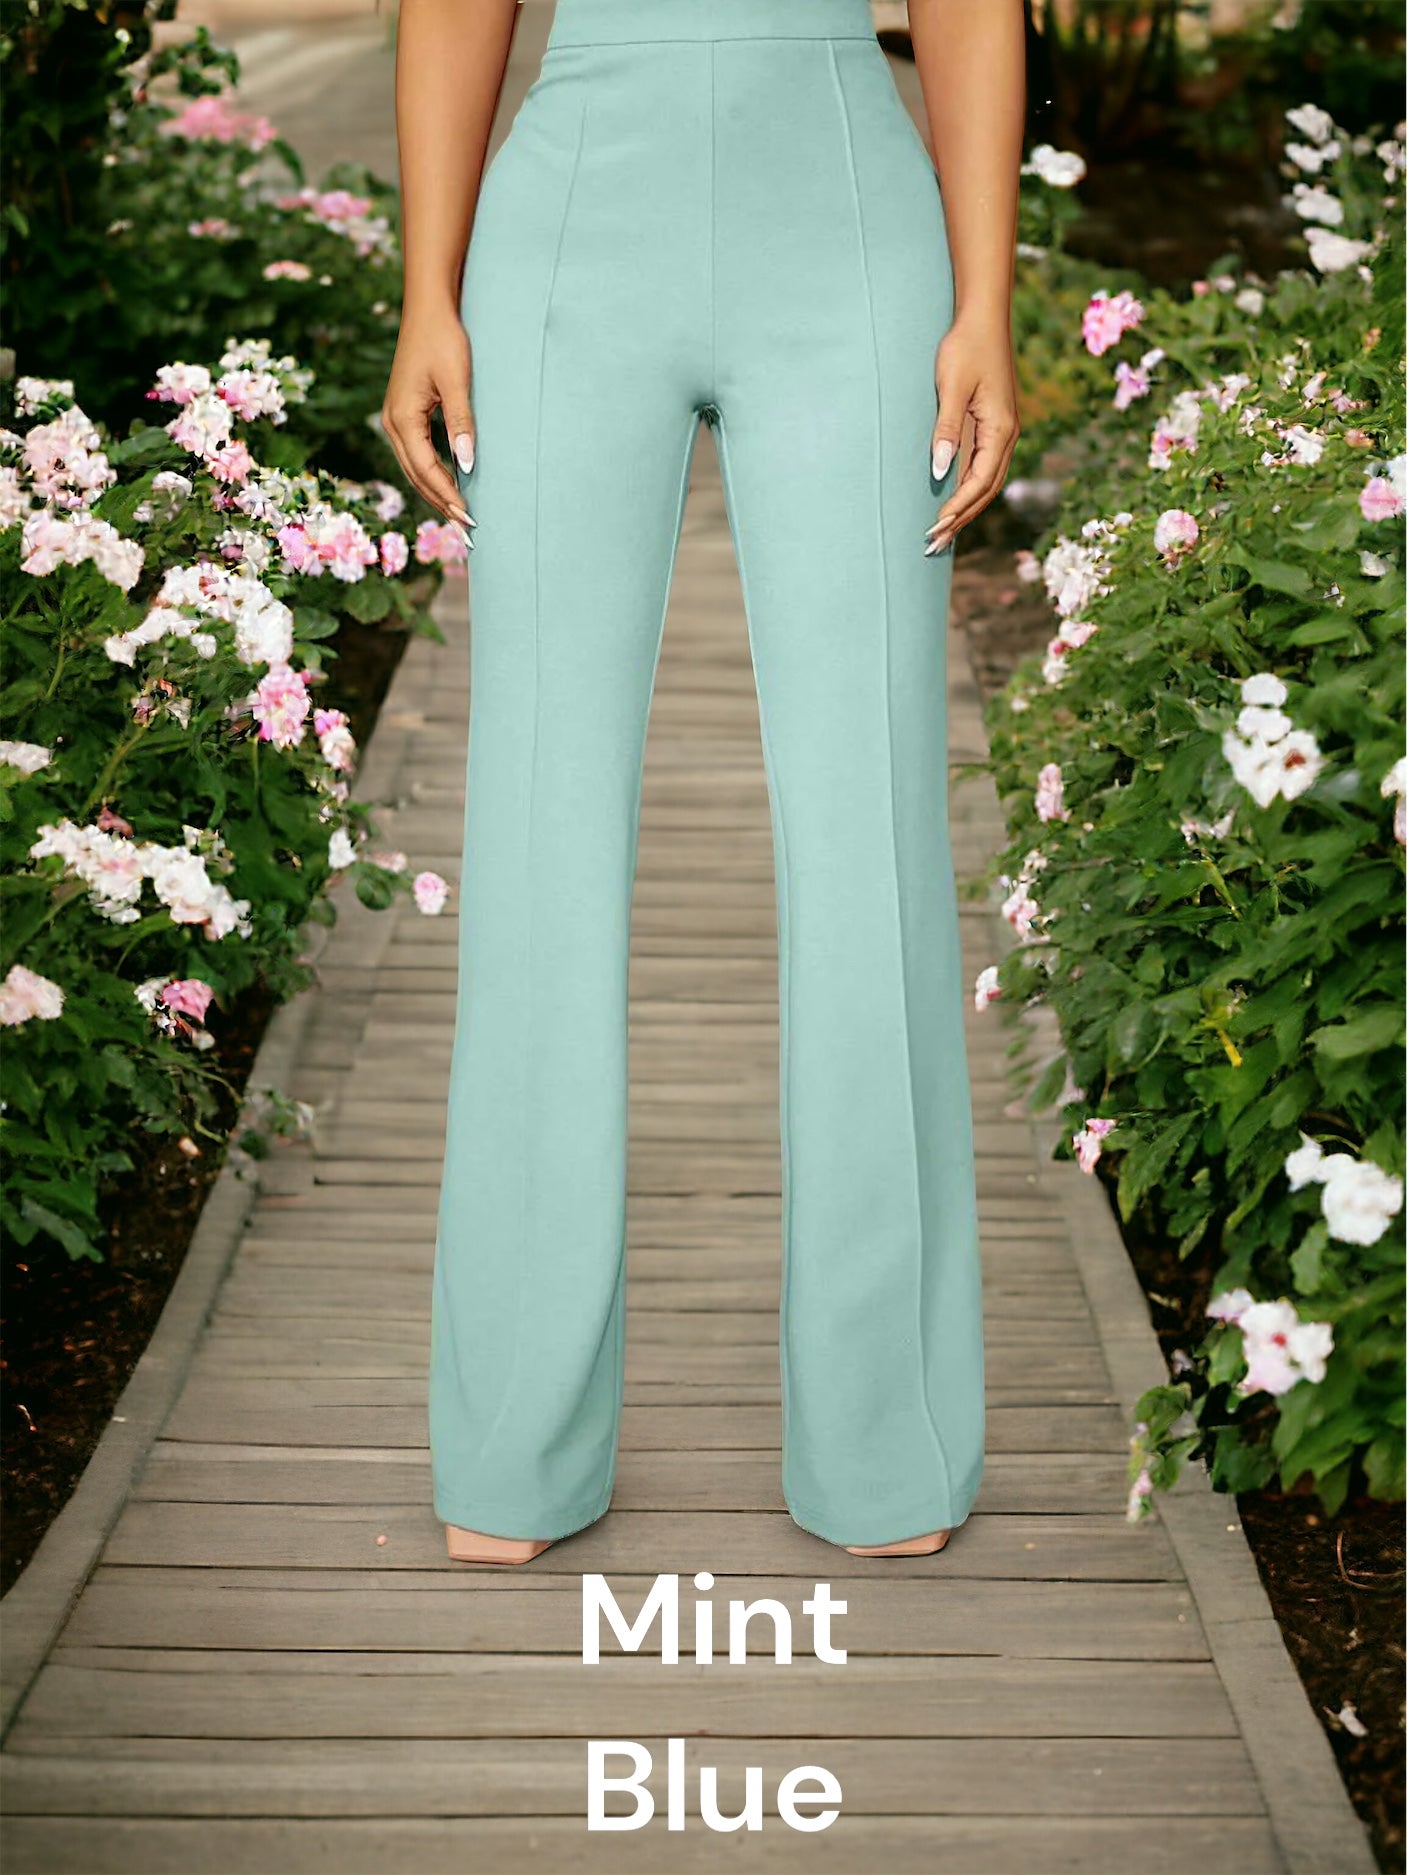 Solid Color Comfy Flare Leg Pants, US 2 - 10 (Seventeen Color Choices)